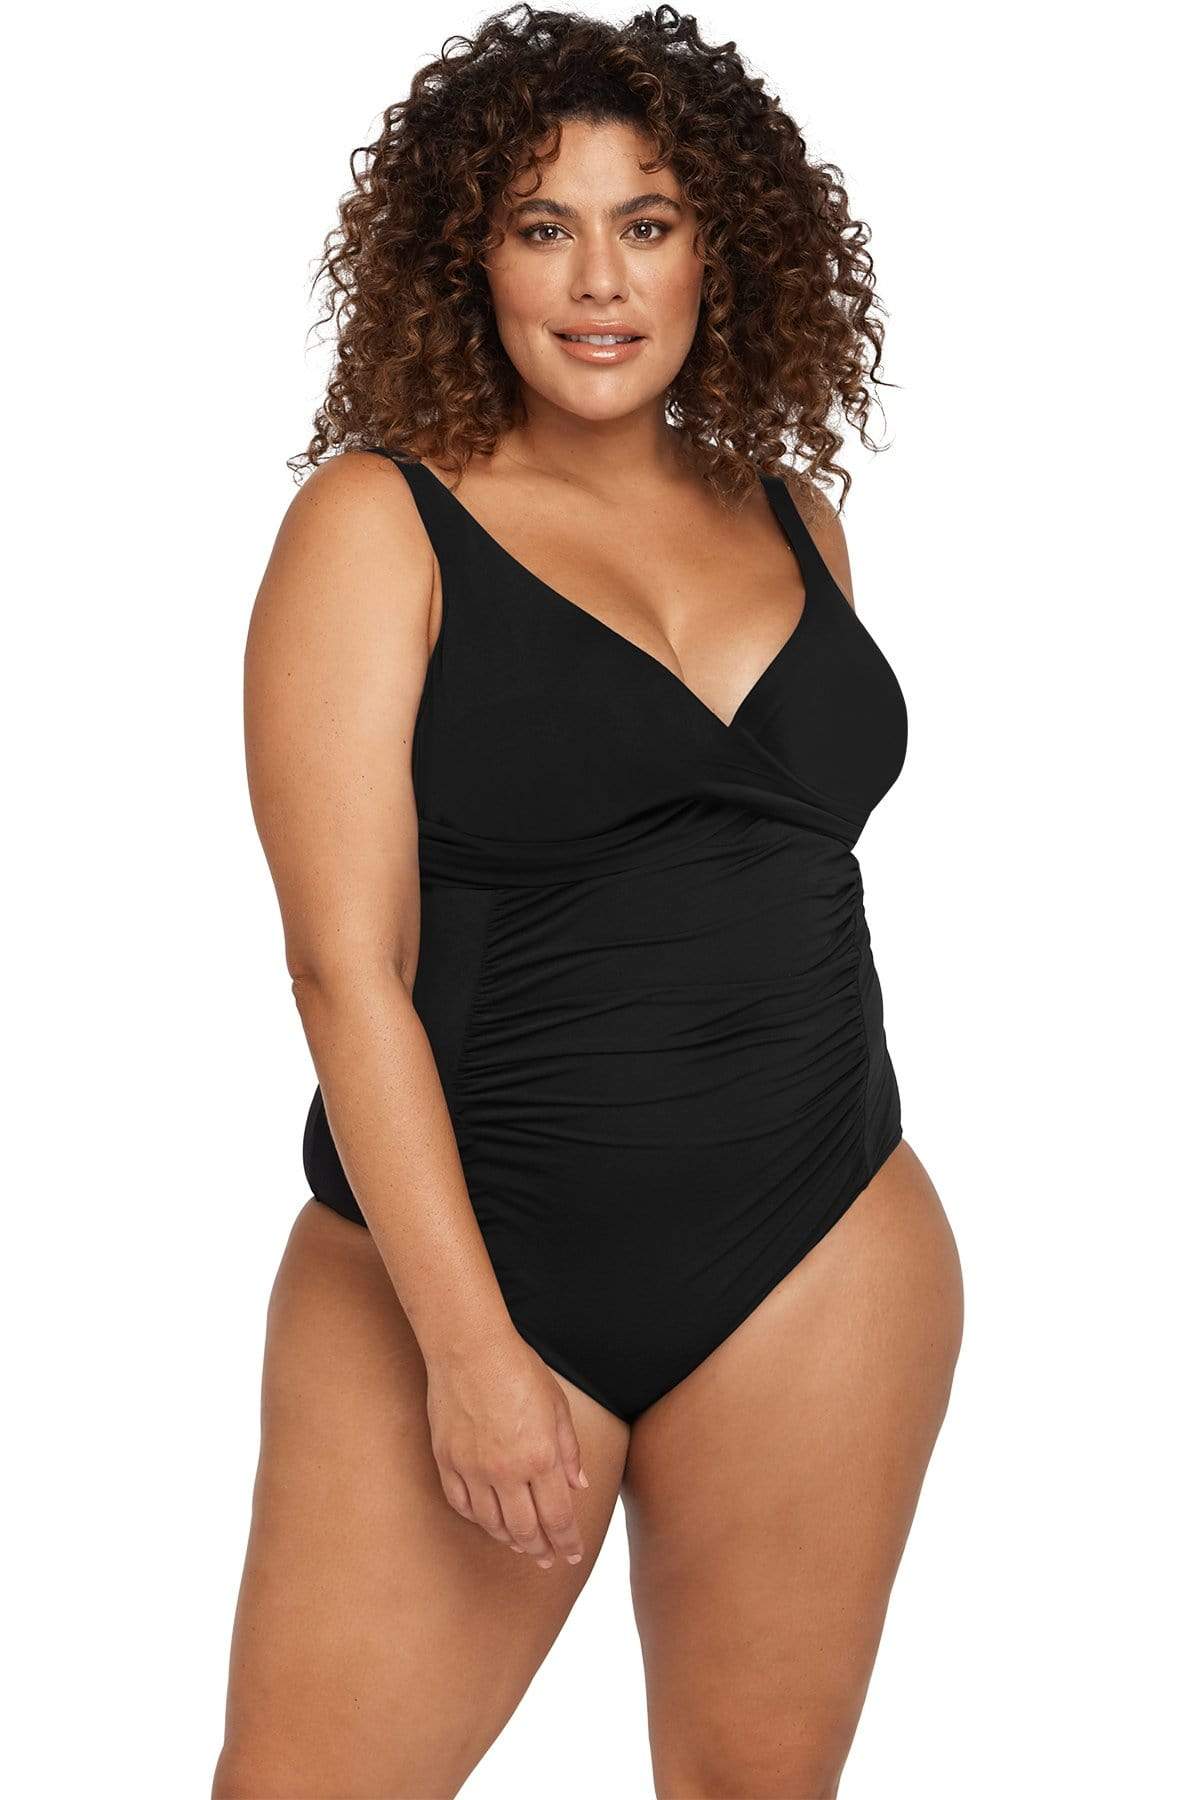 Ladies Two Piece Bikini Black Chlorine Resistant Swimsuit